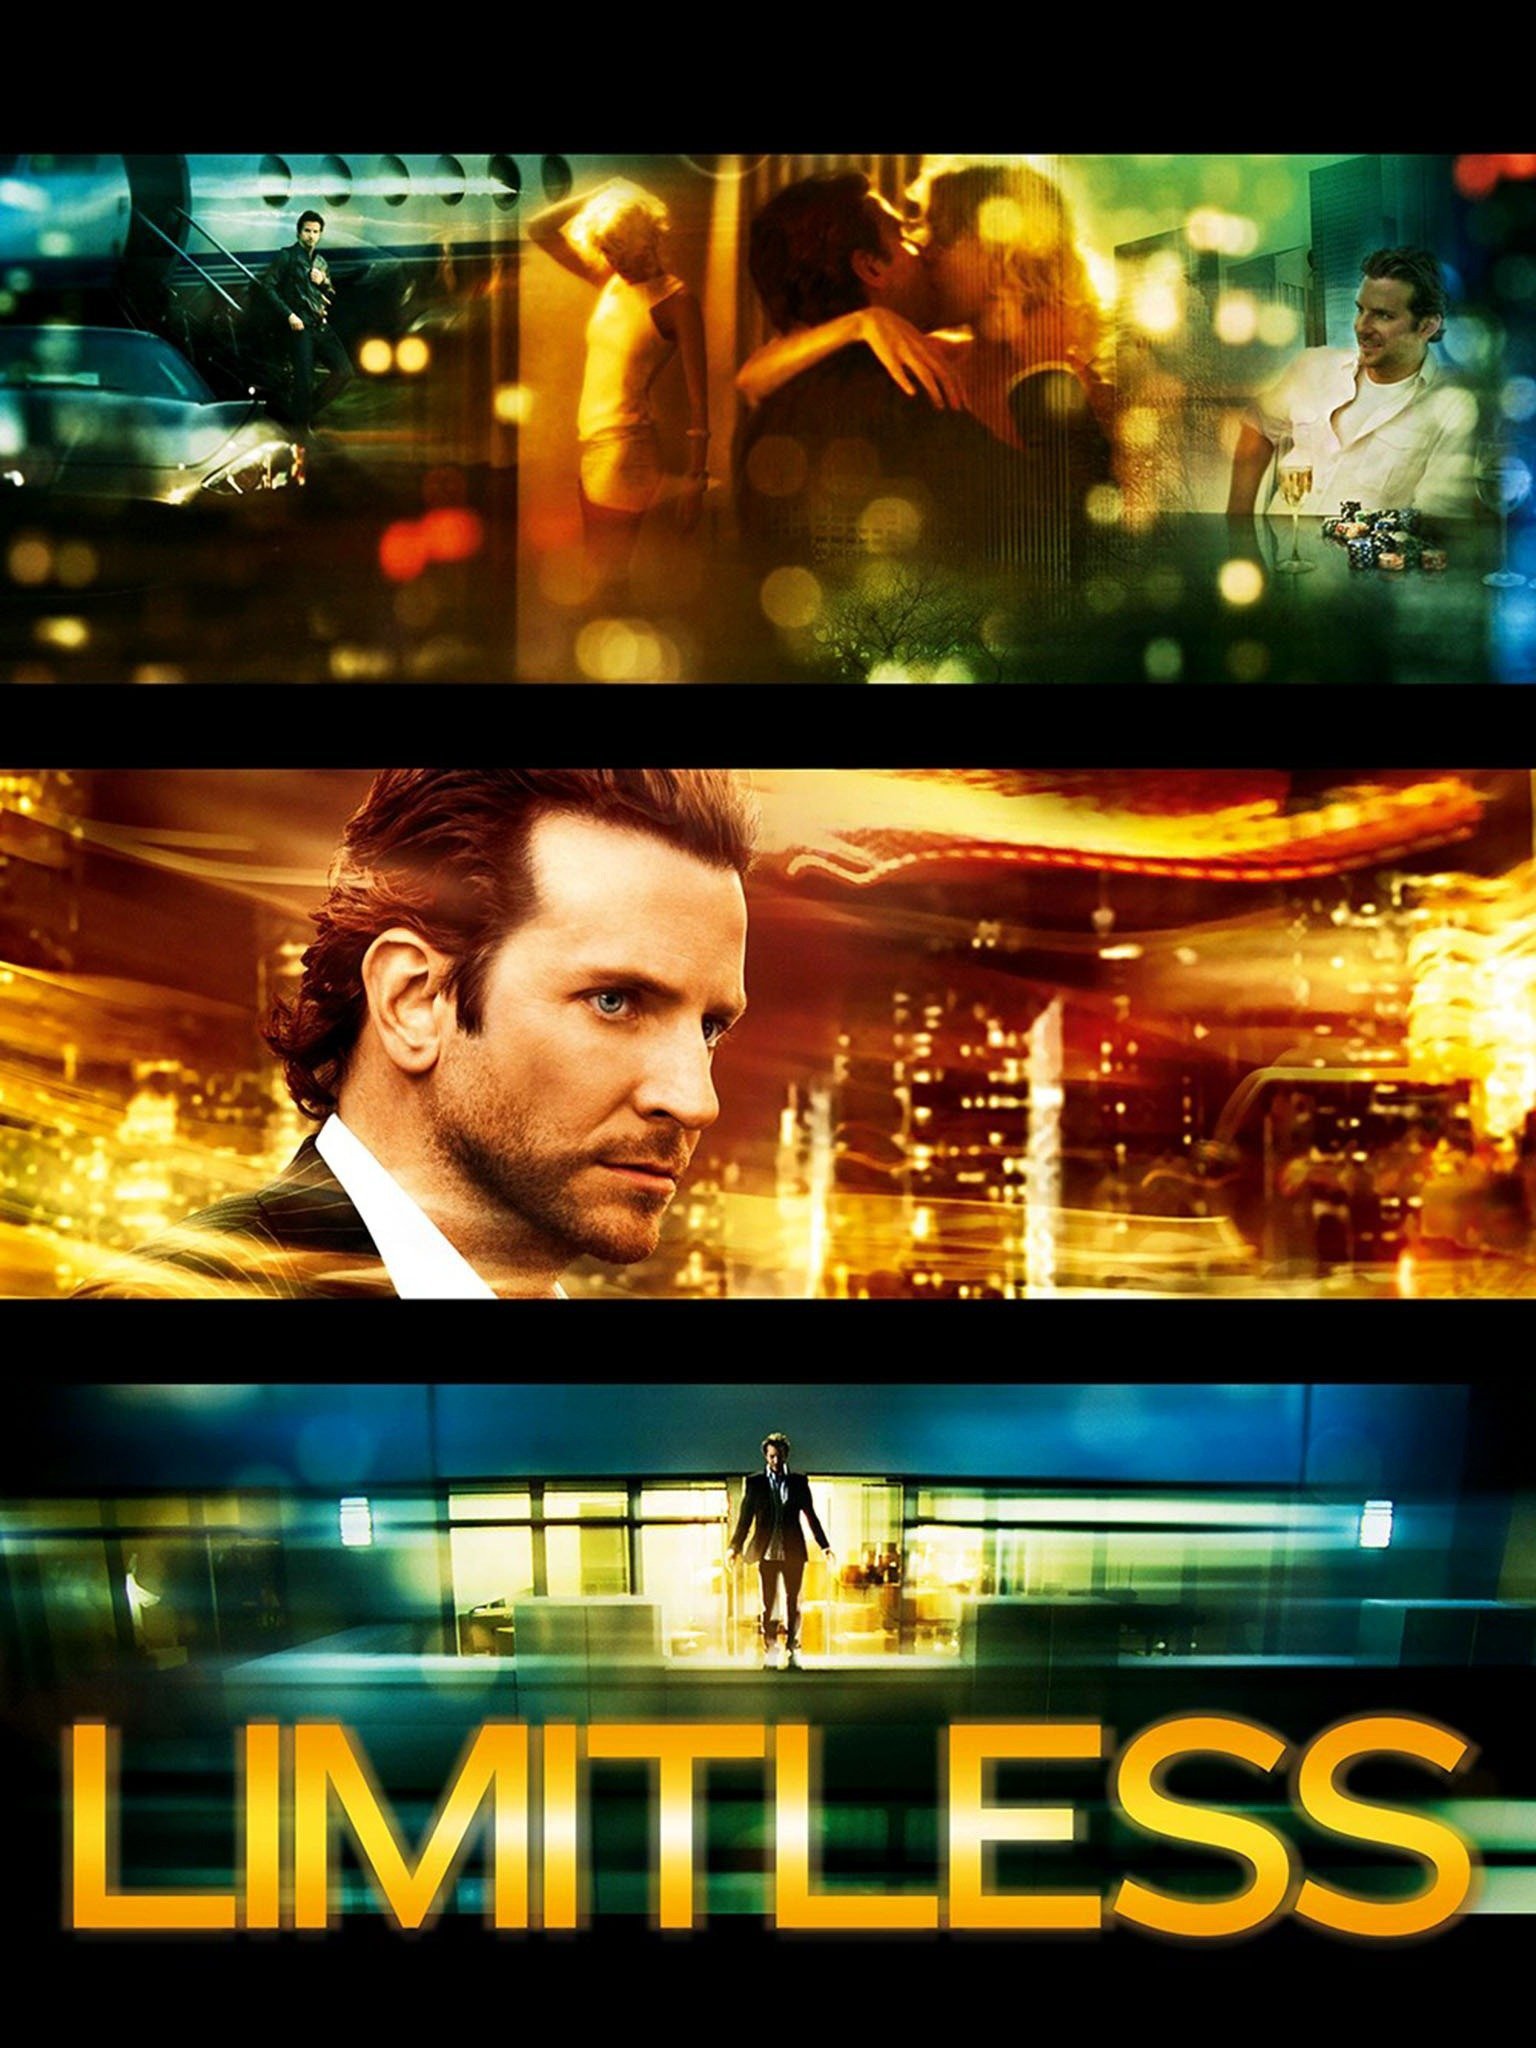 Limitless - Movie Reviews